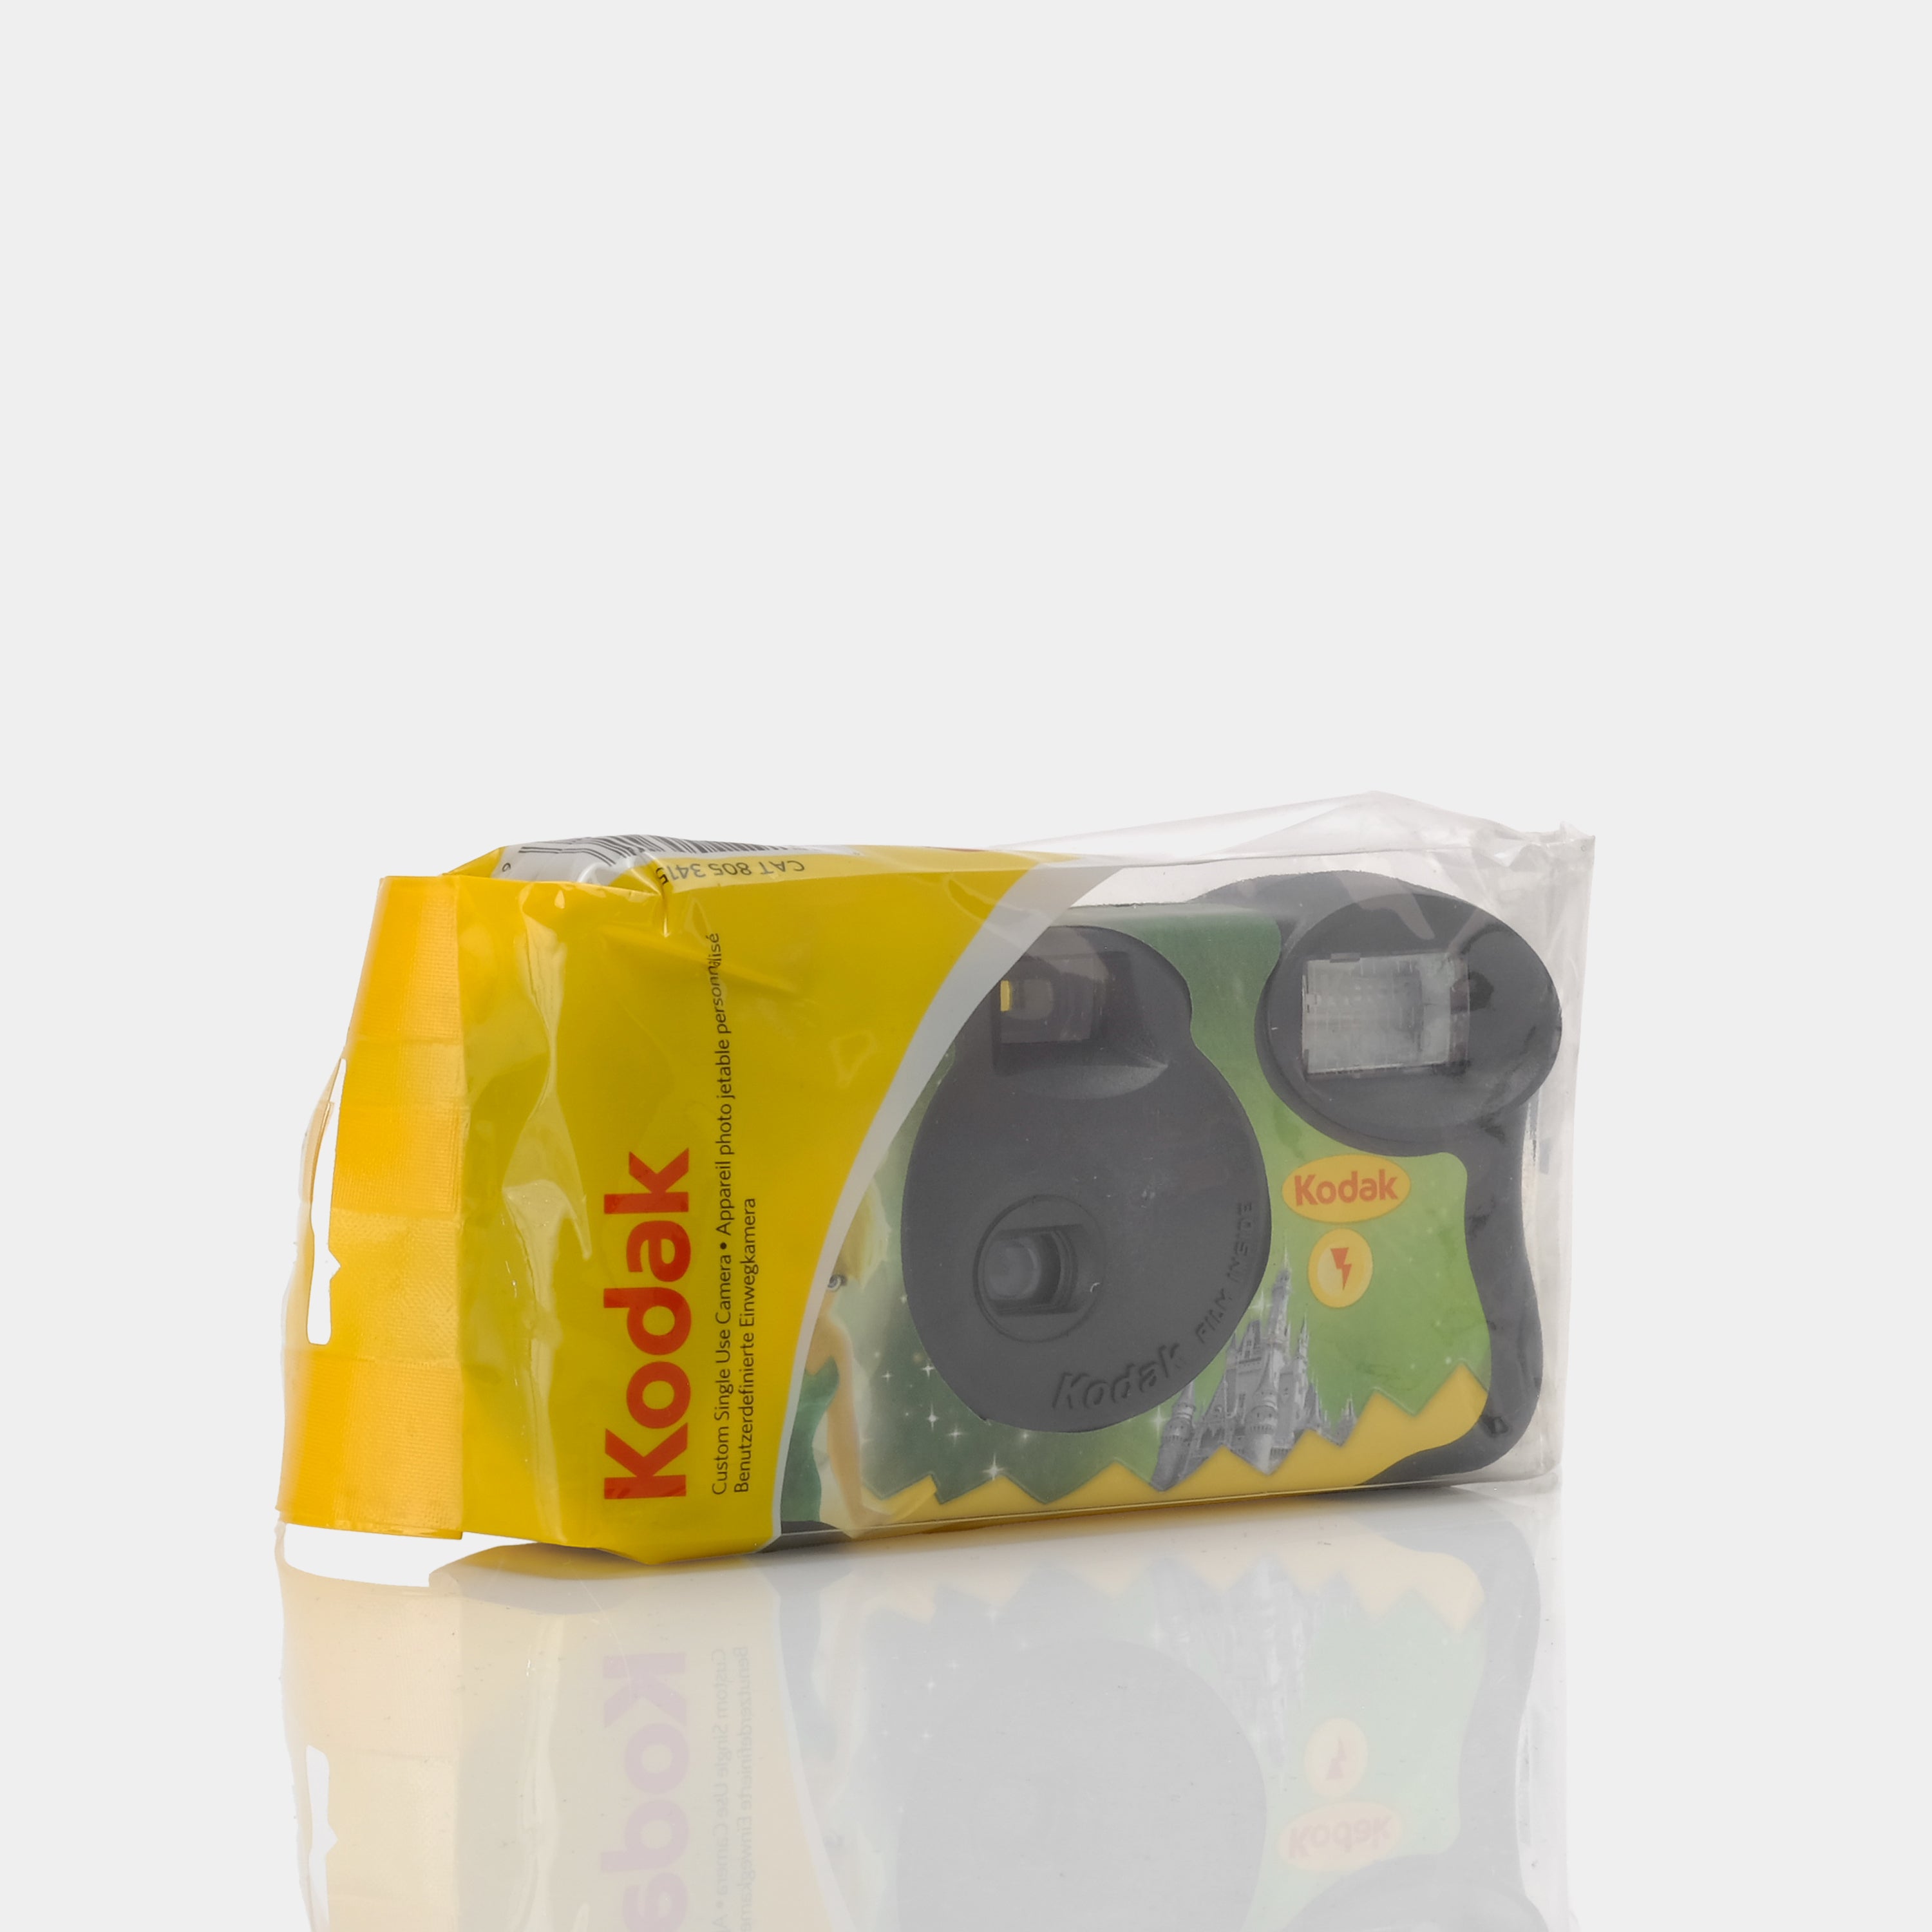 Kodak Color FunSaver - Custom Camera Collection